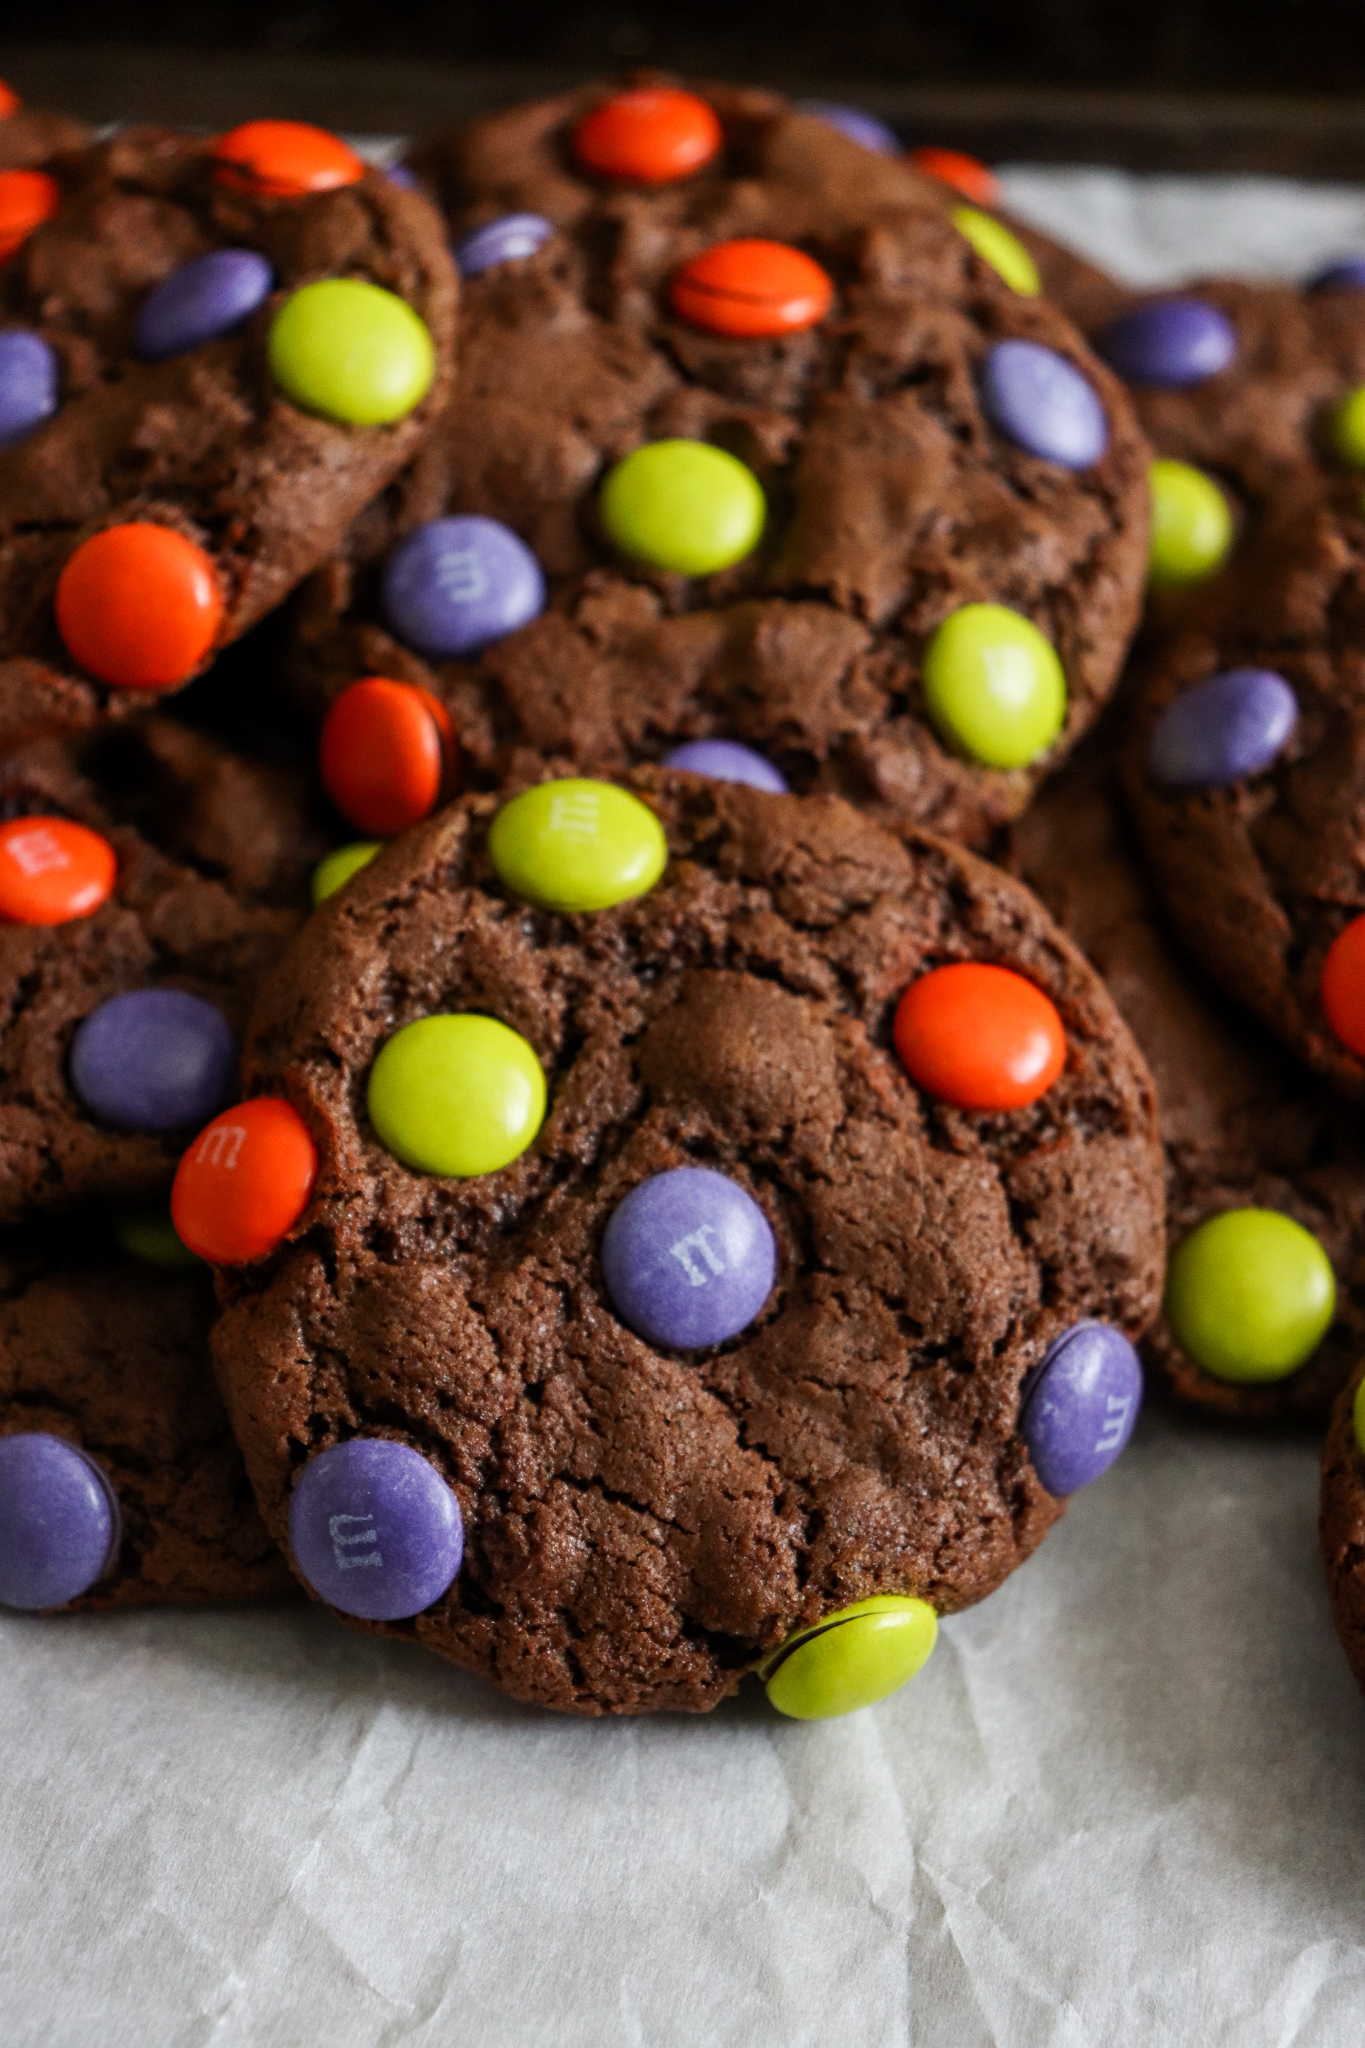 Halloween Chocolate M&M Cookies